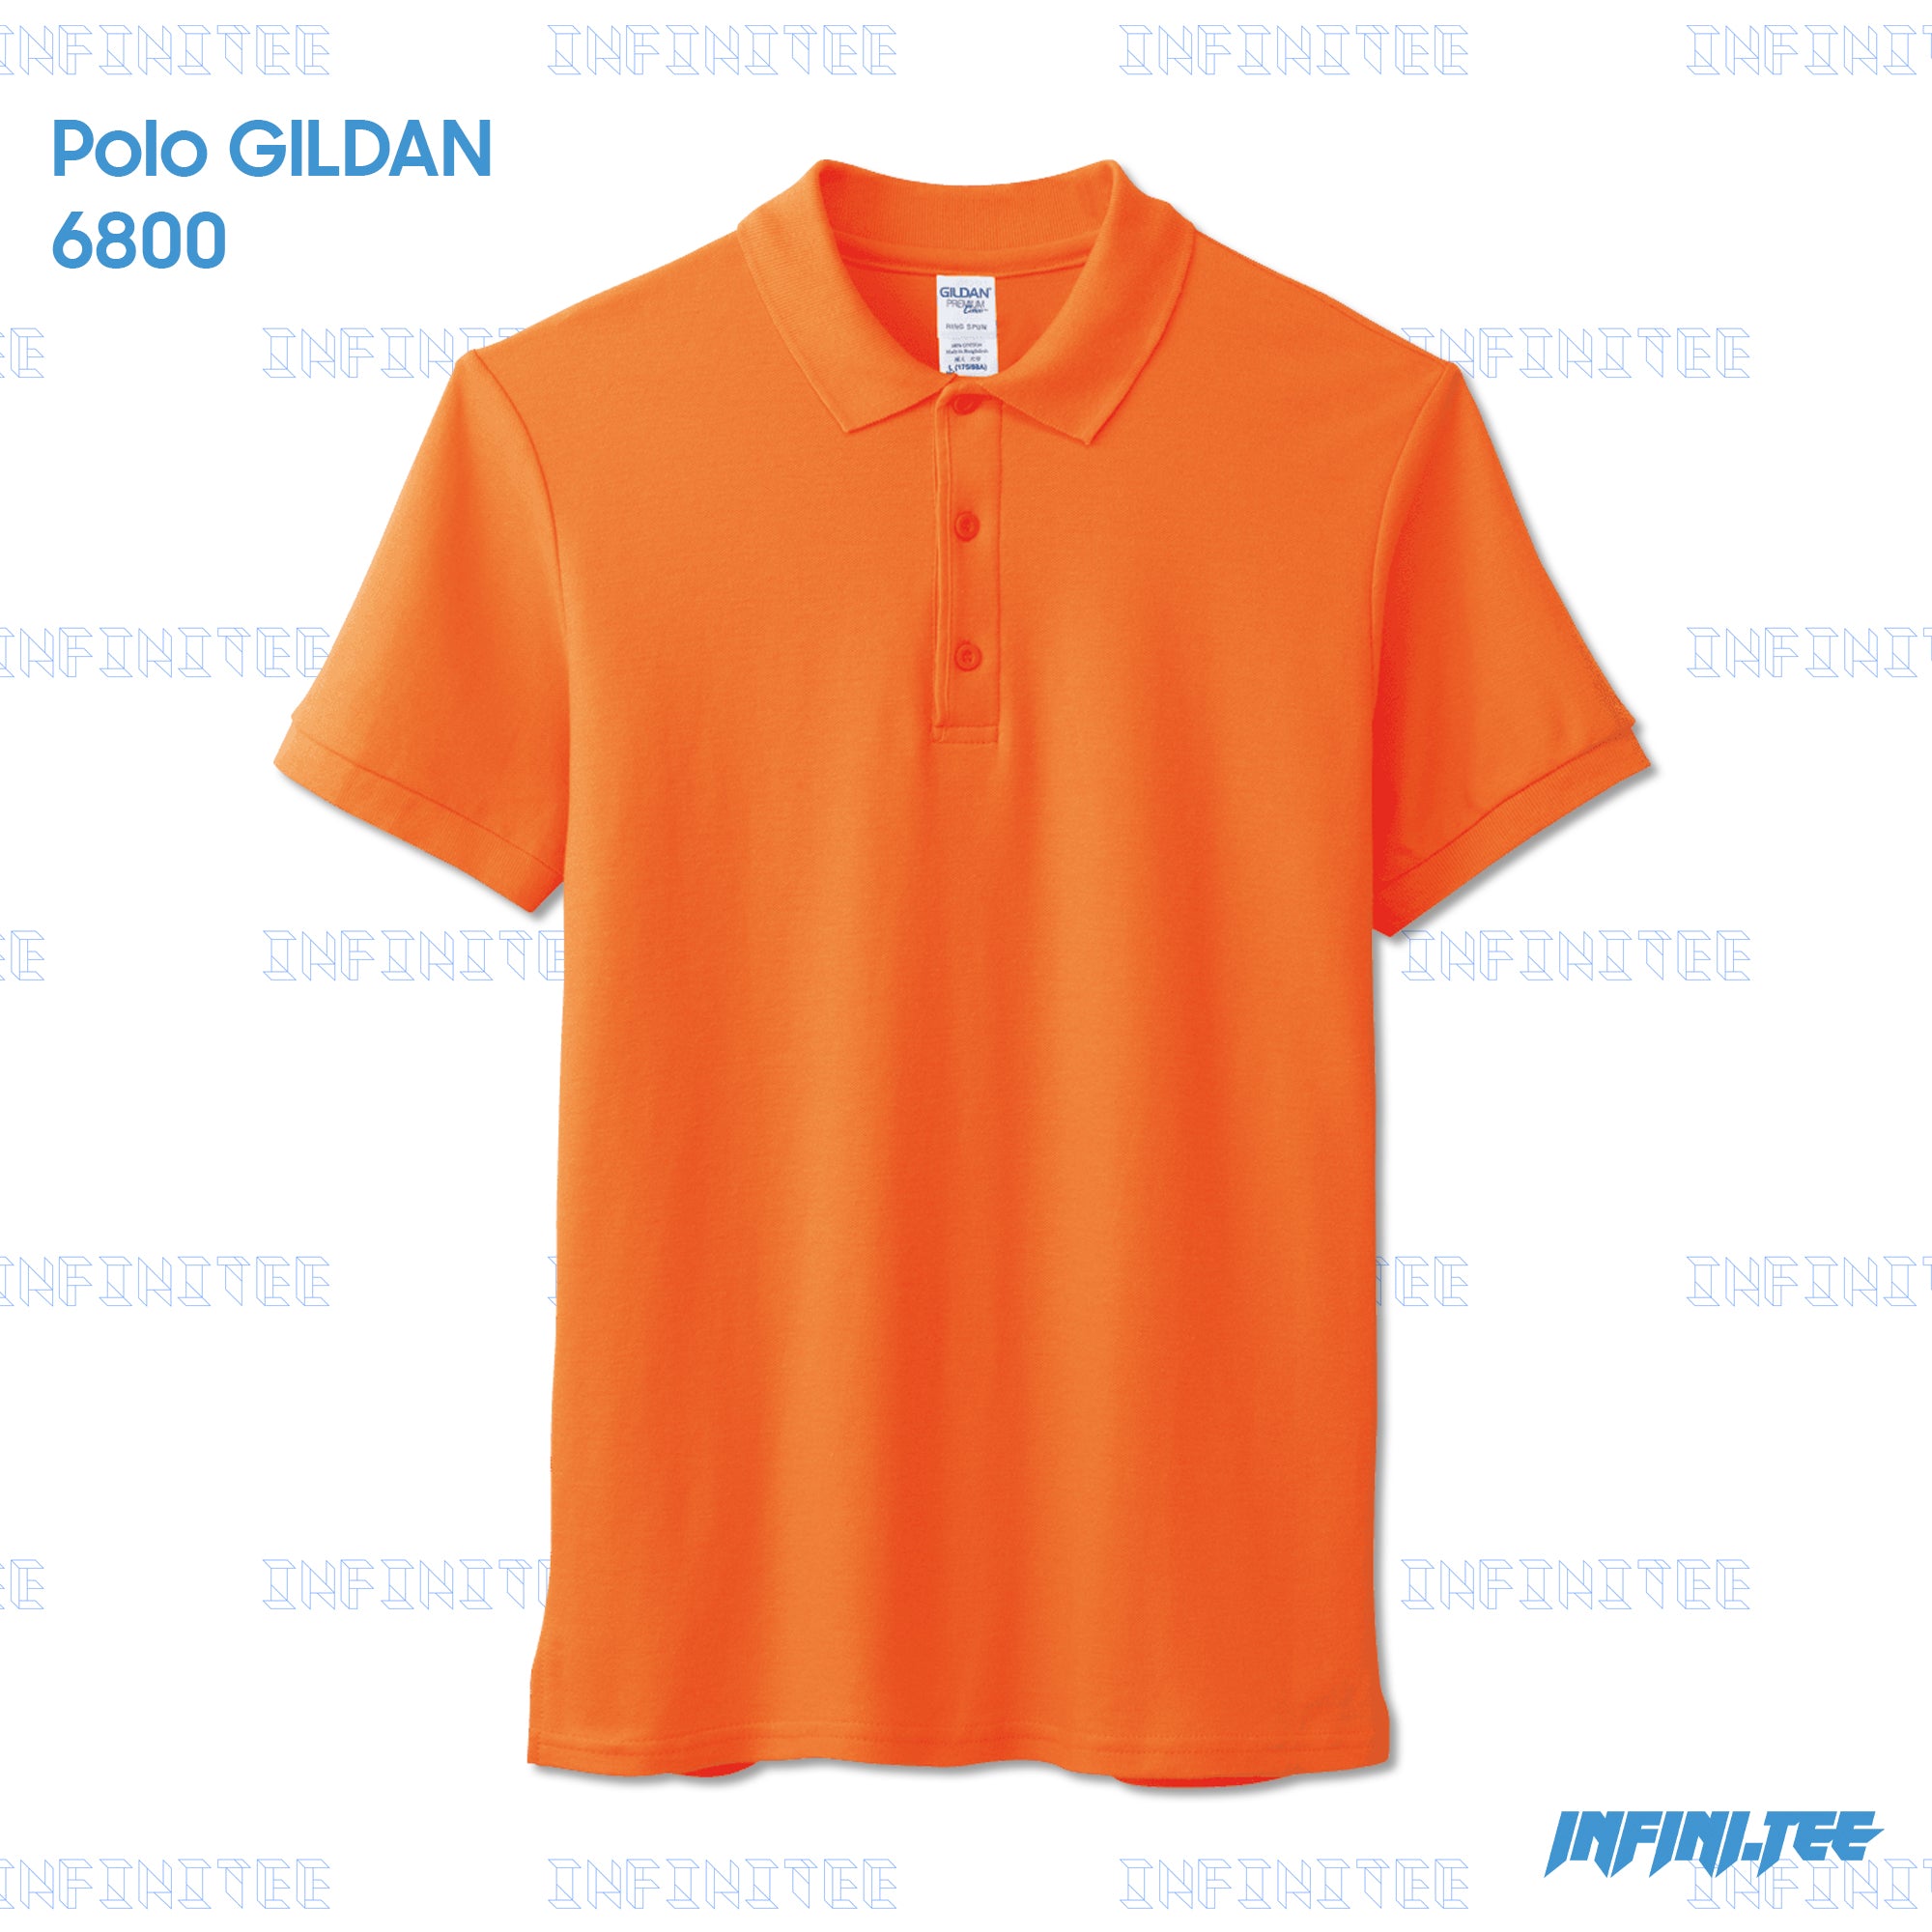 POLO 6800 GILDAN - ORANGE